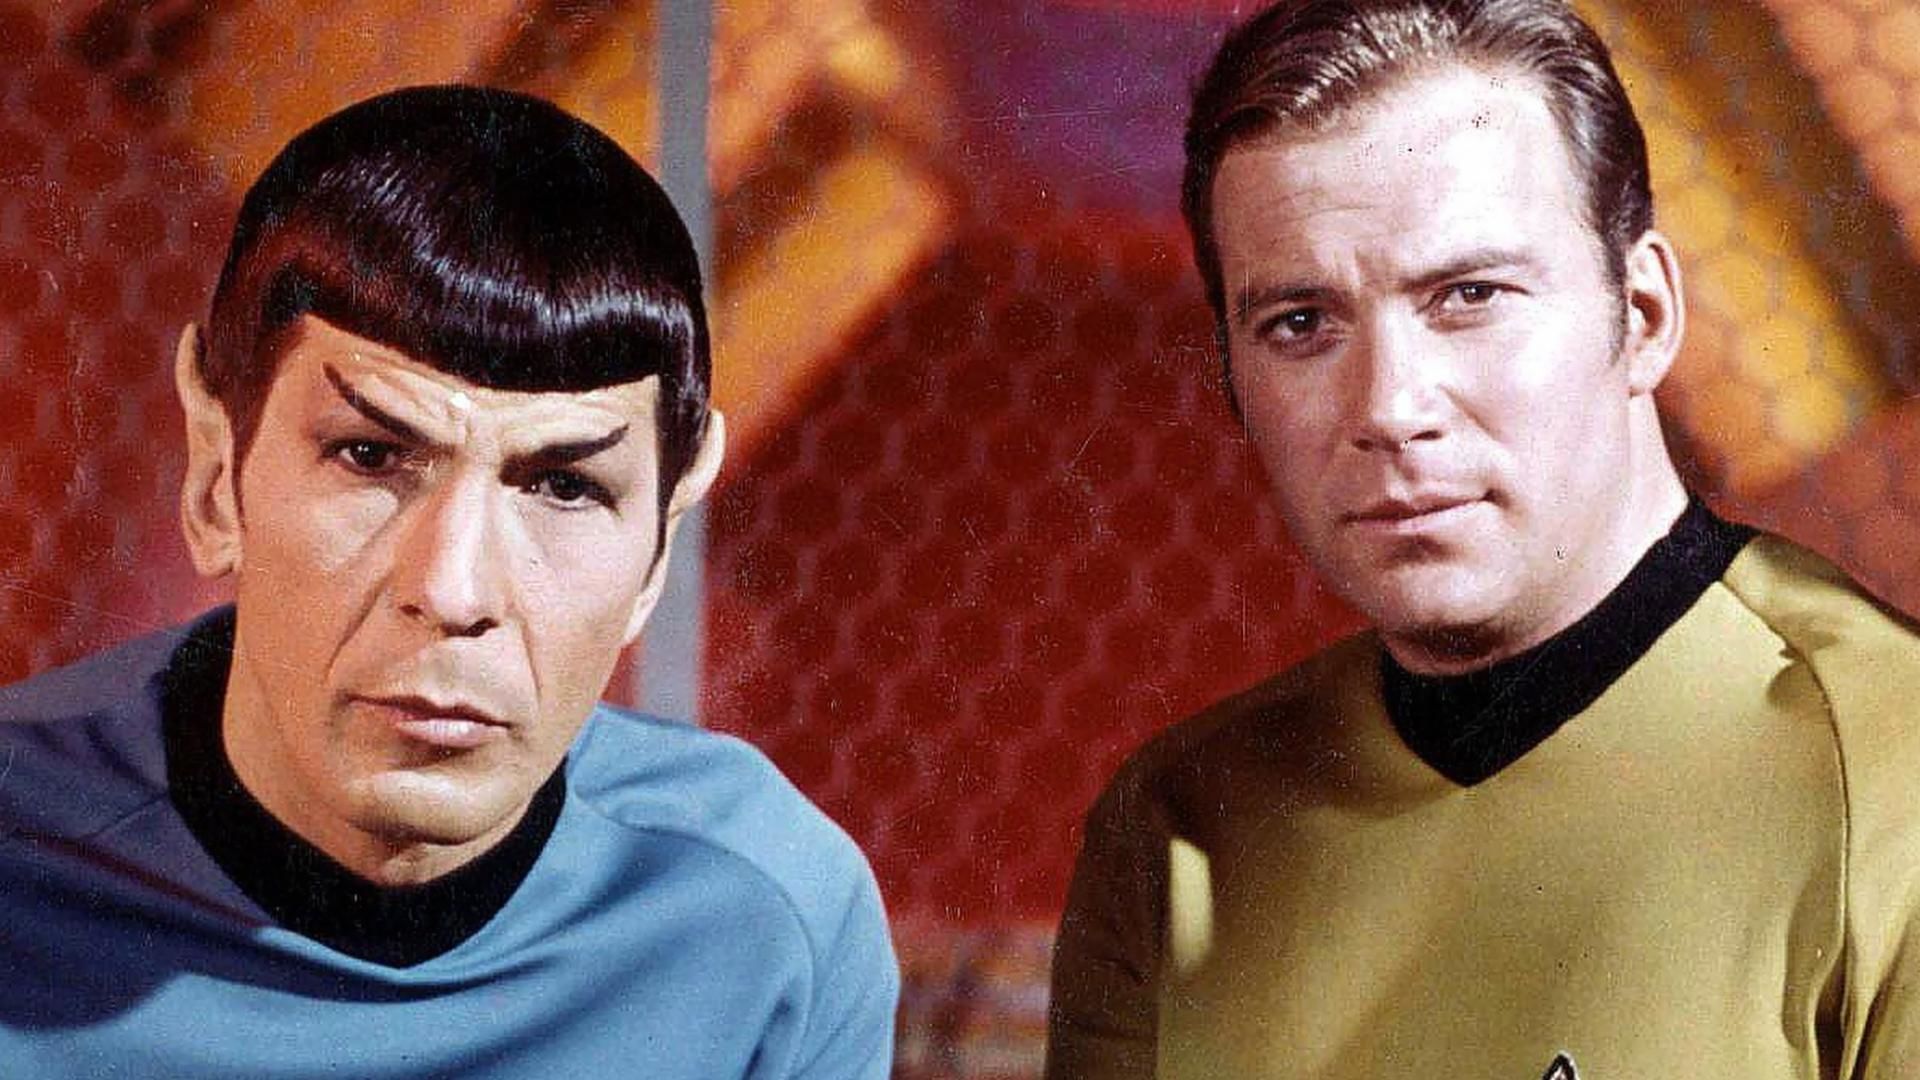 Star Trek Spock and Kirk via official website 2019